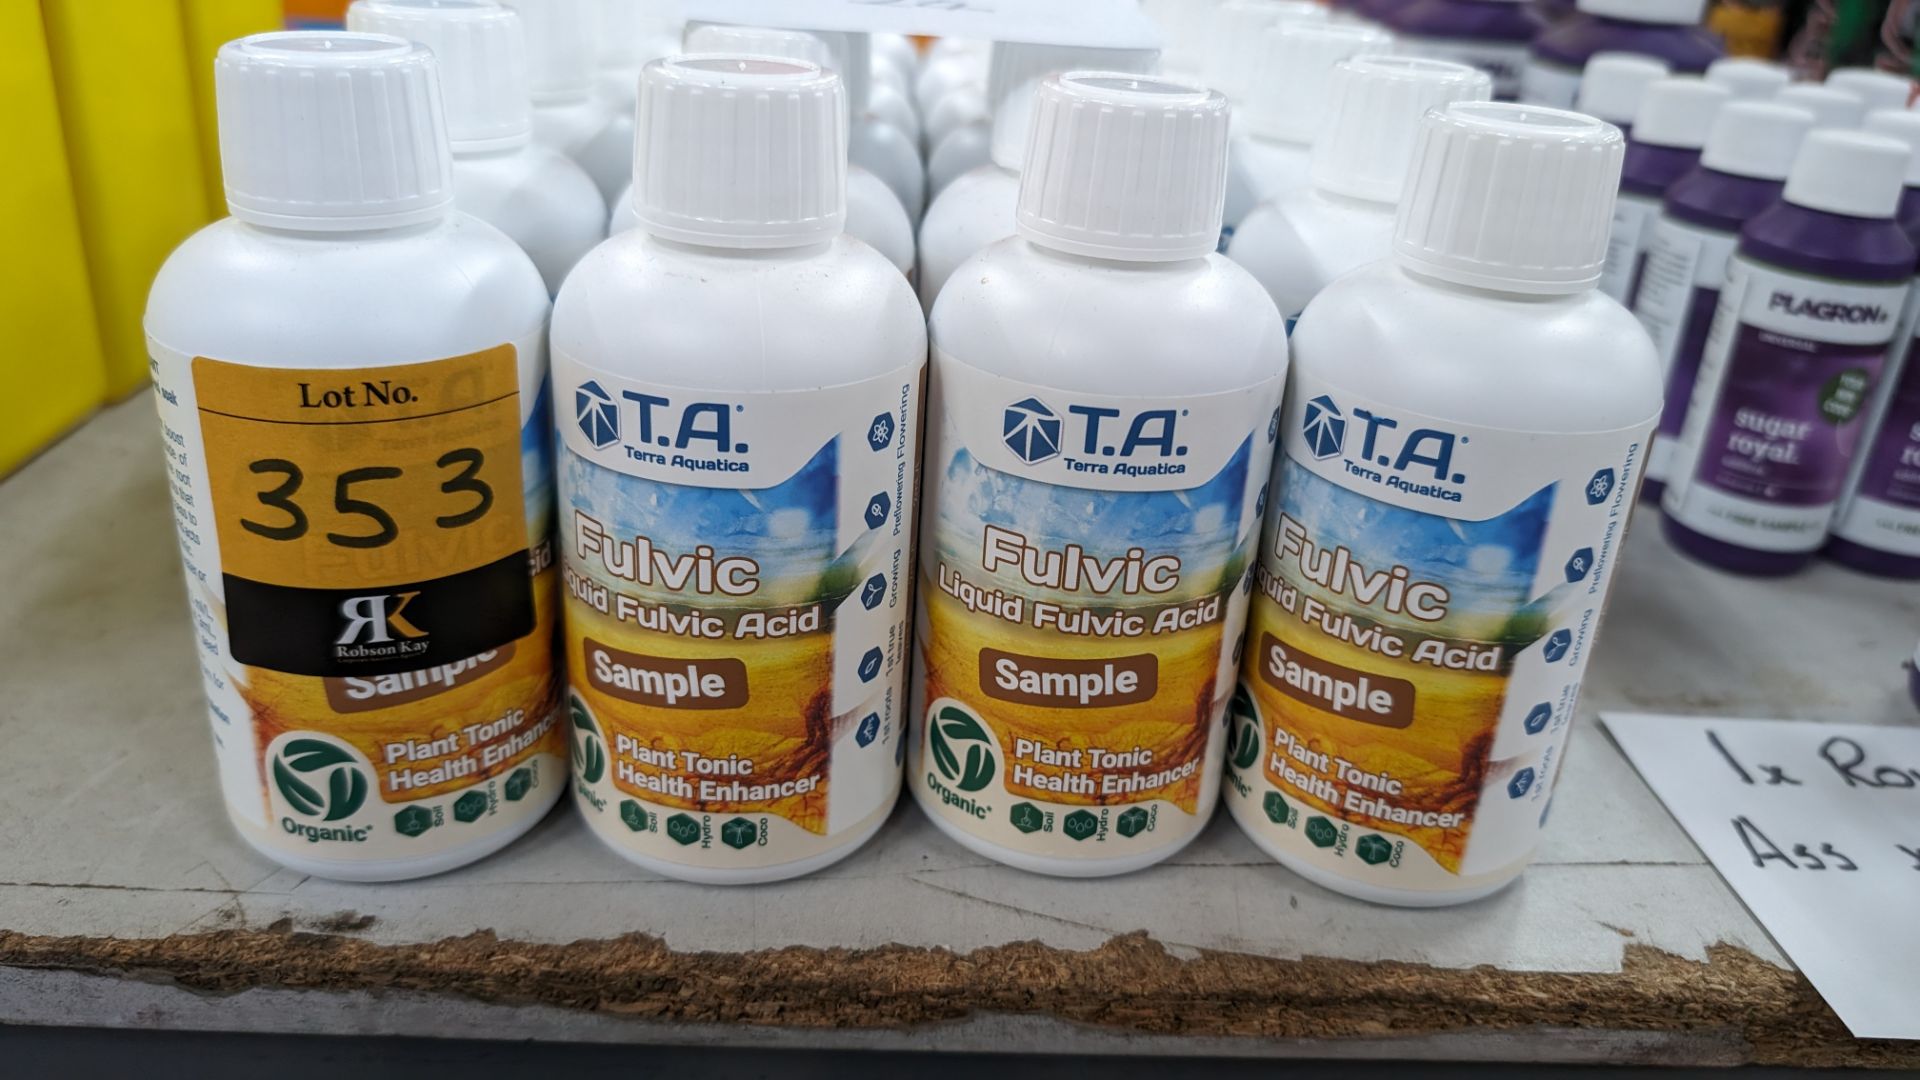 24 off 250ml bottles of Terra Aquatica Fulvic liquid acid